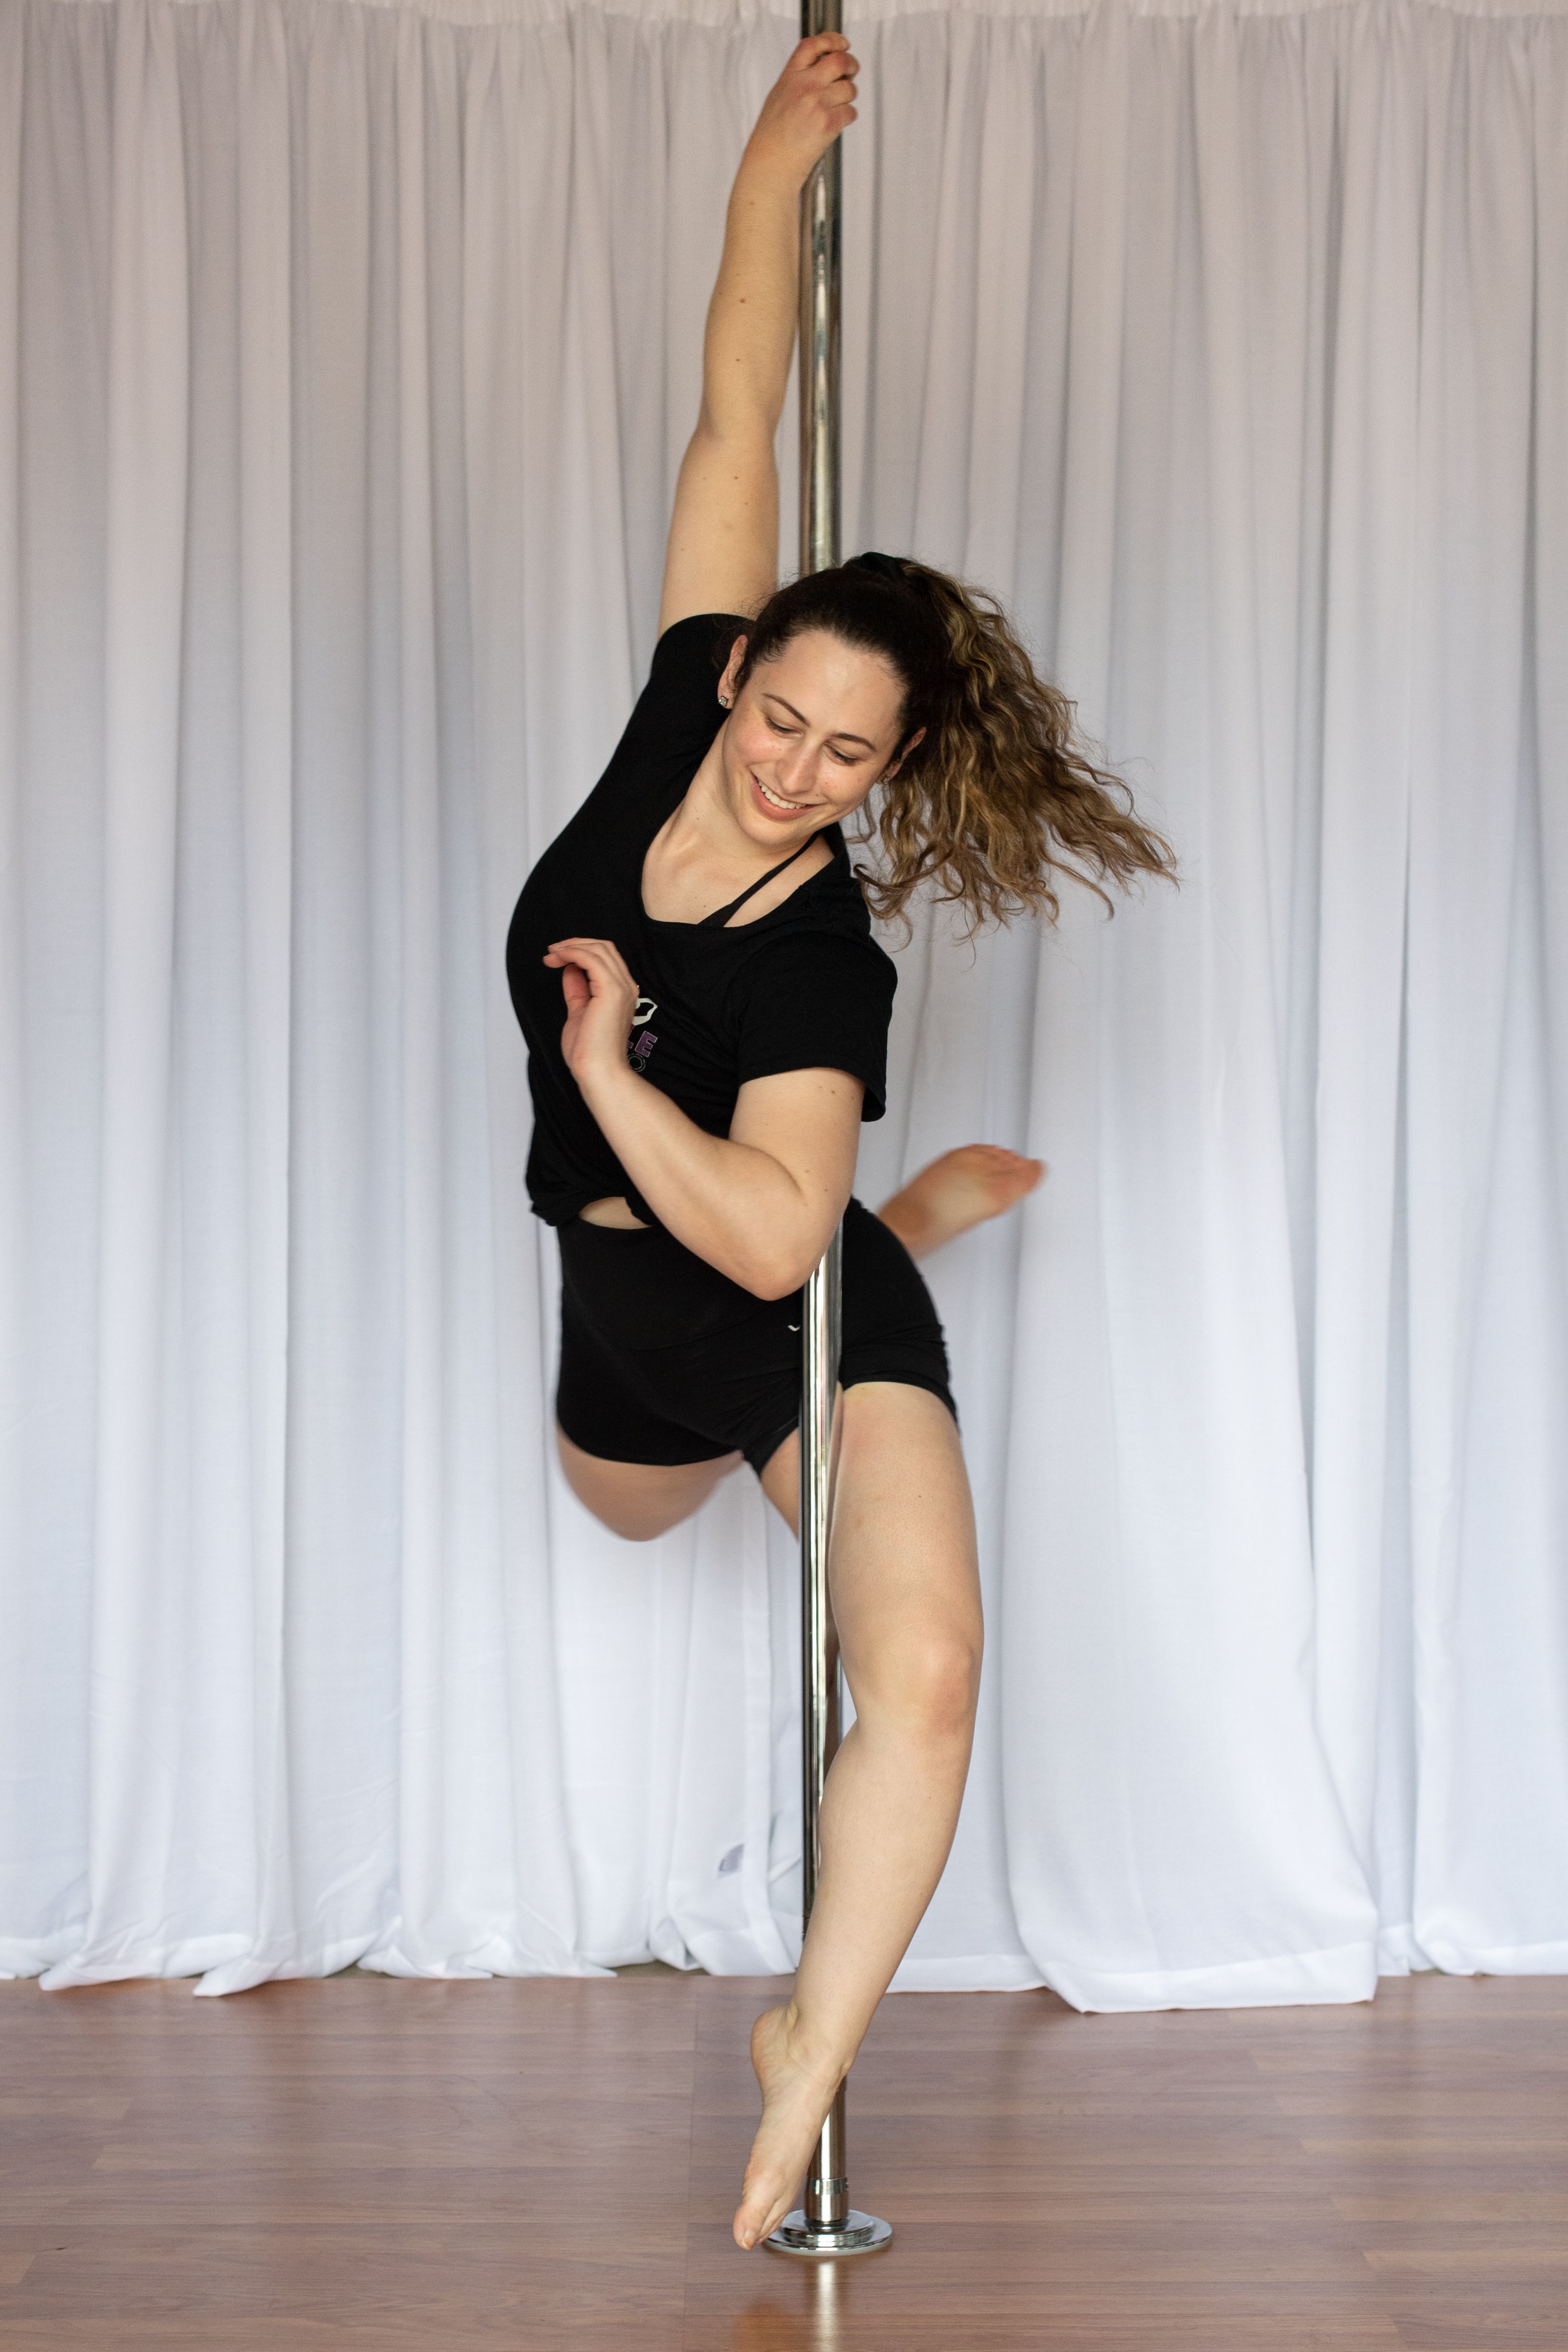 Simone Muscat demonstrating pole poses